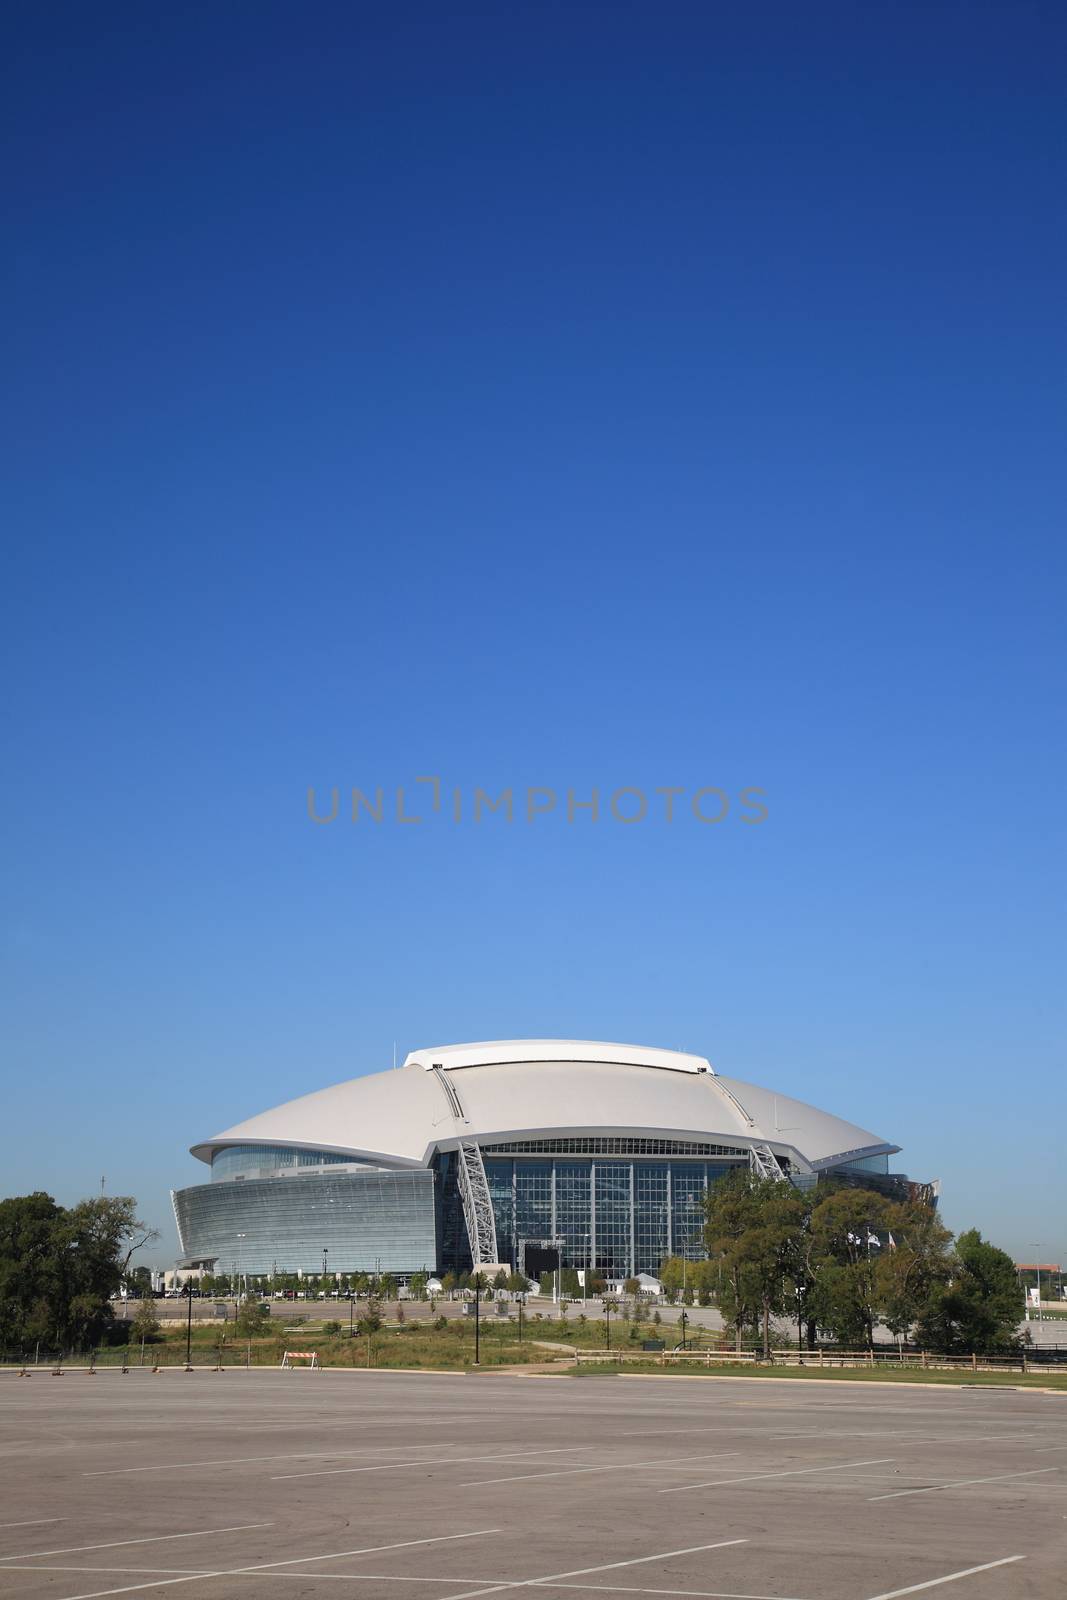 Home of NFL Football Dallas Cowboys in Arlington, Texas.